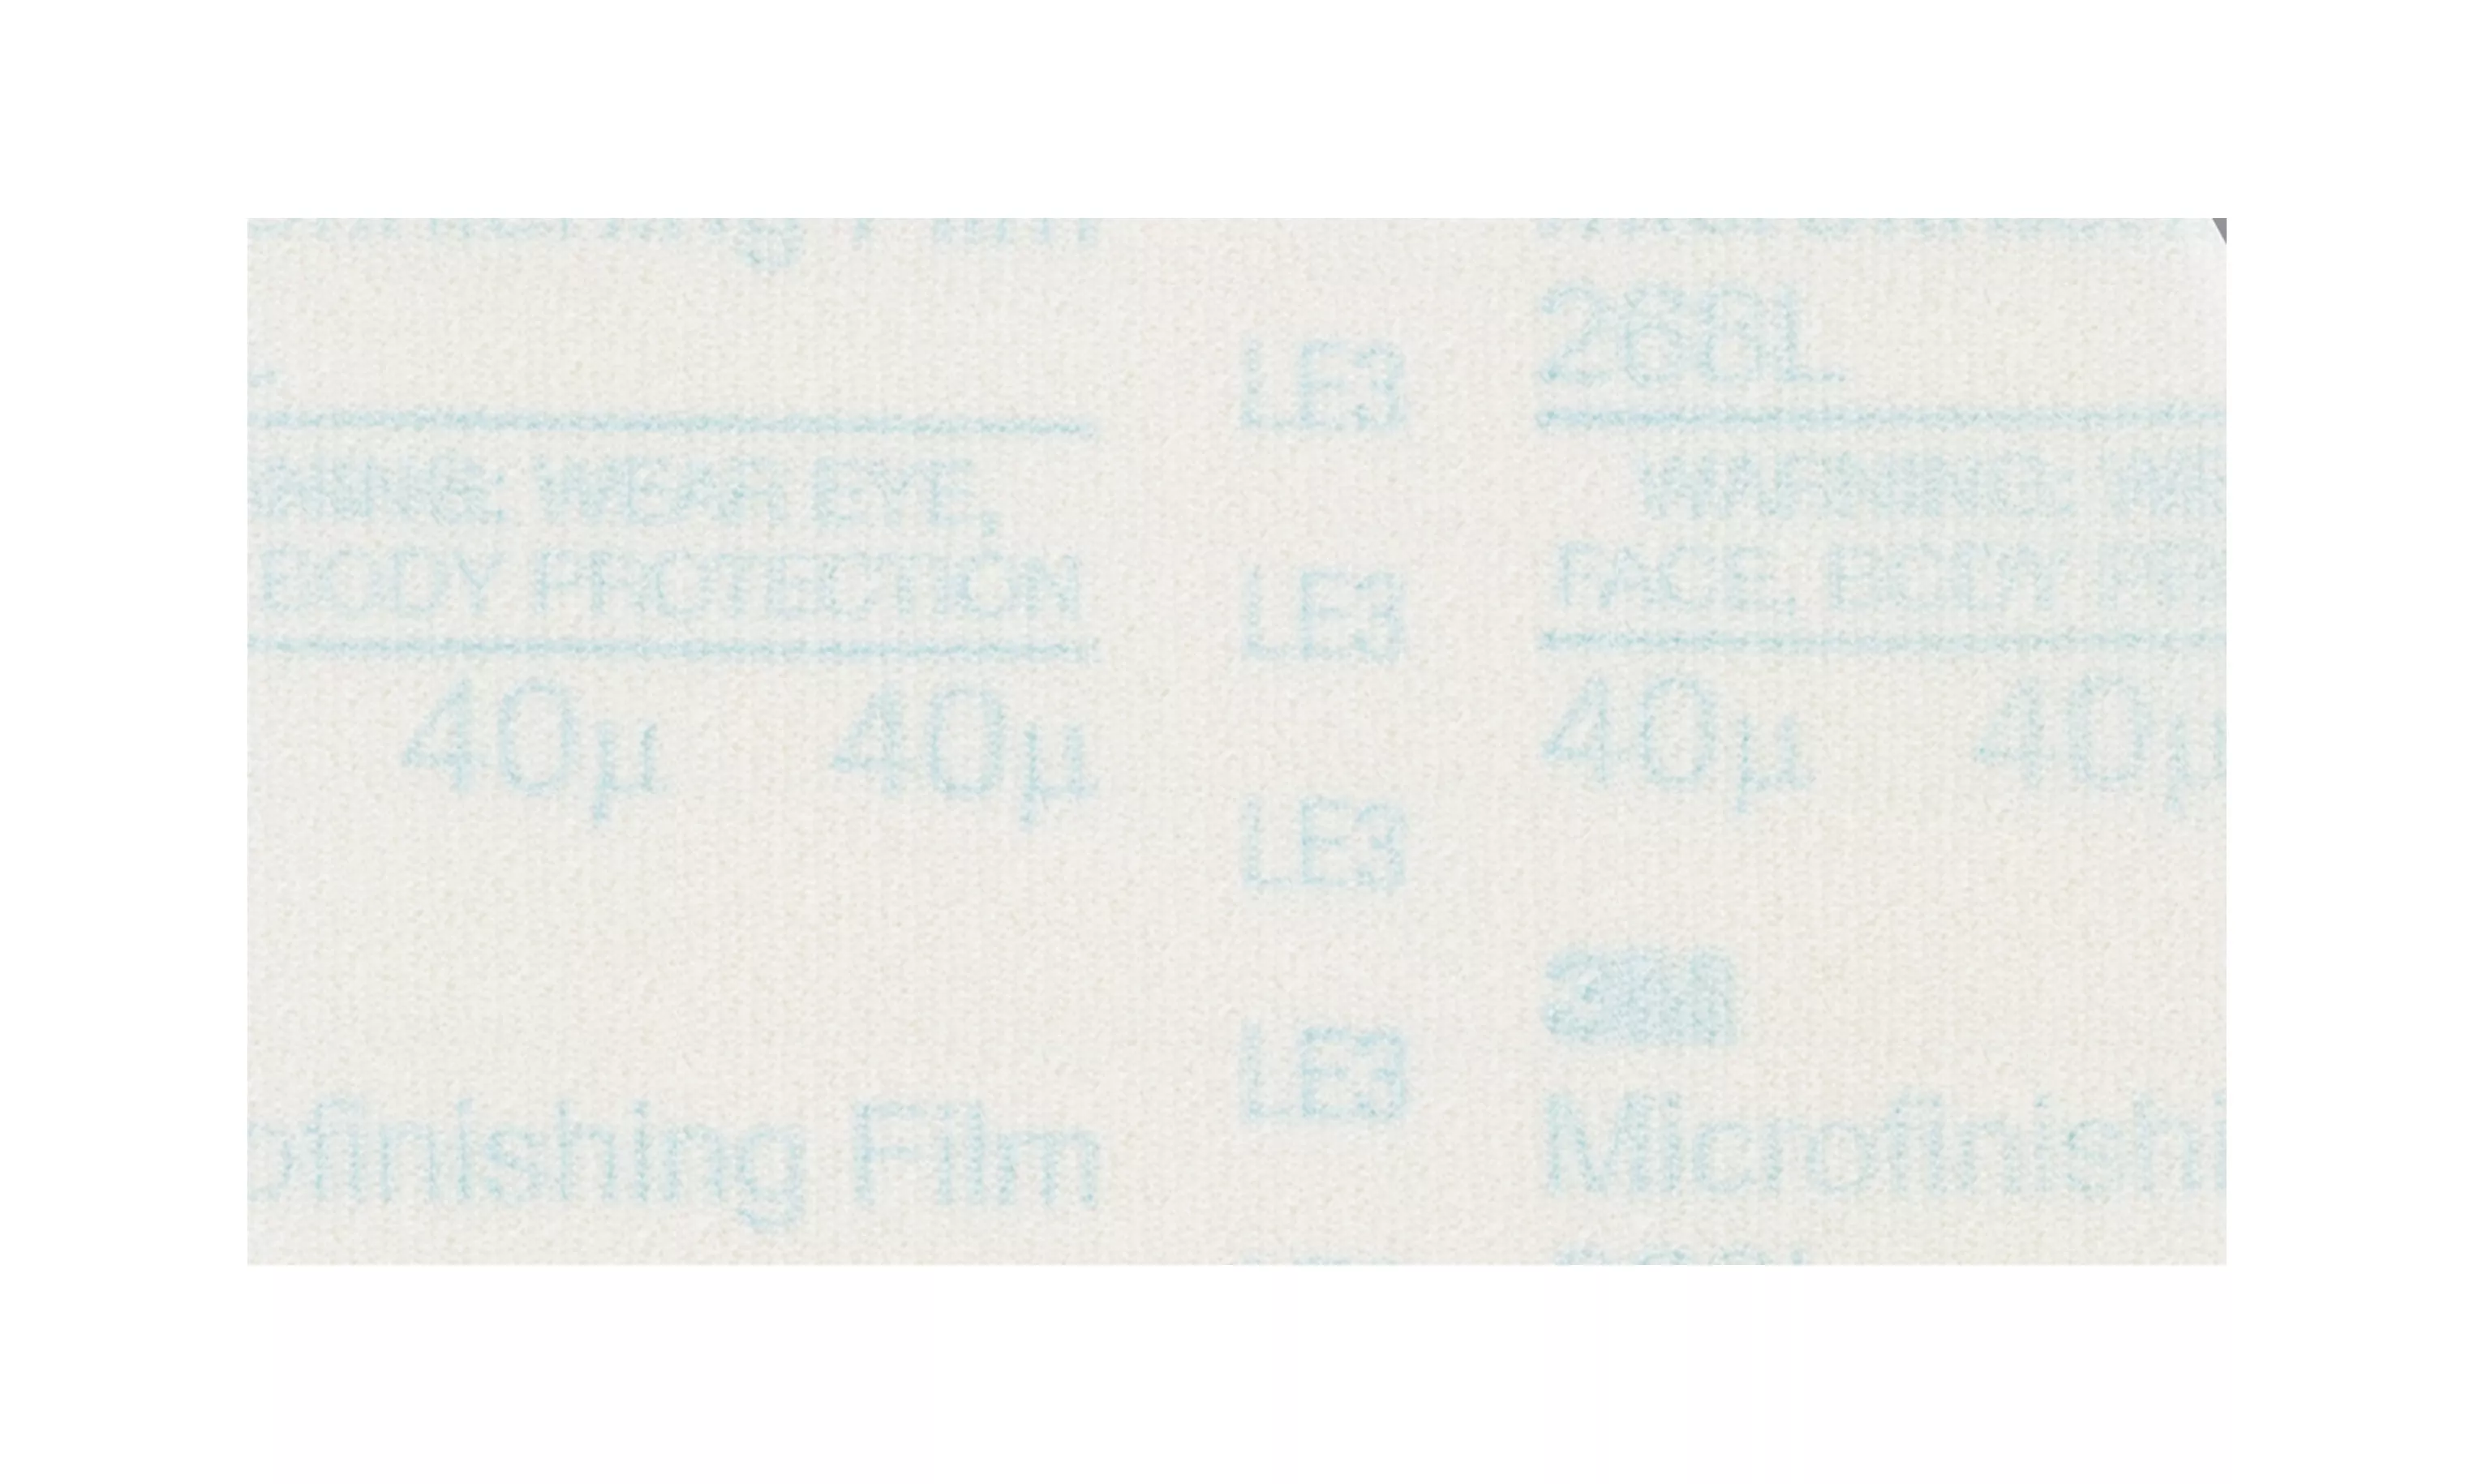 3M™ Microfinishing PSA Film Type D Sheet 268L, 12 in x 14 in 60 Mic,
25/Bag, 100 ea/Case